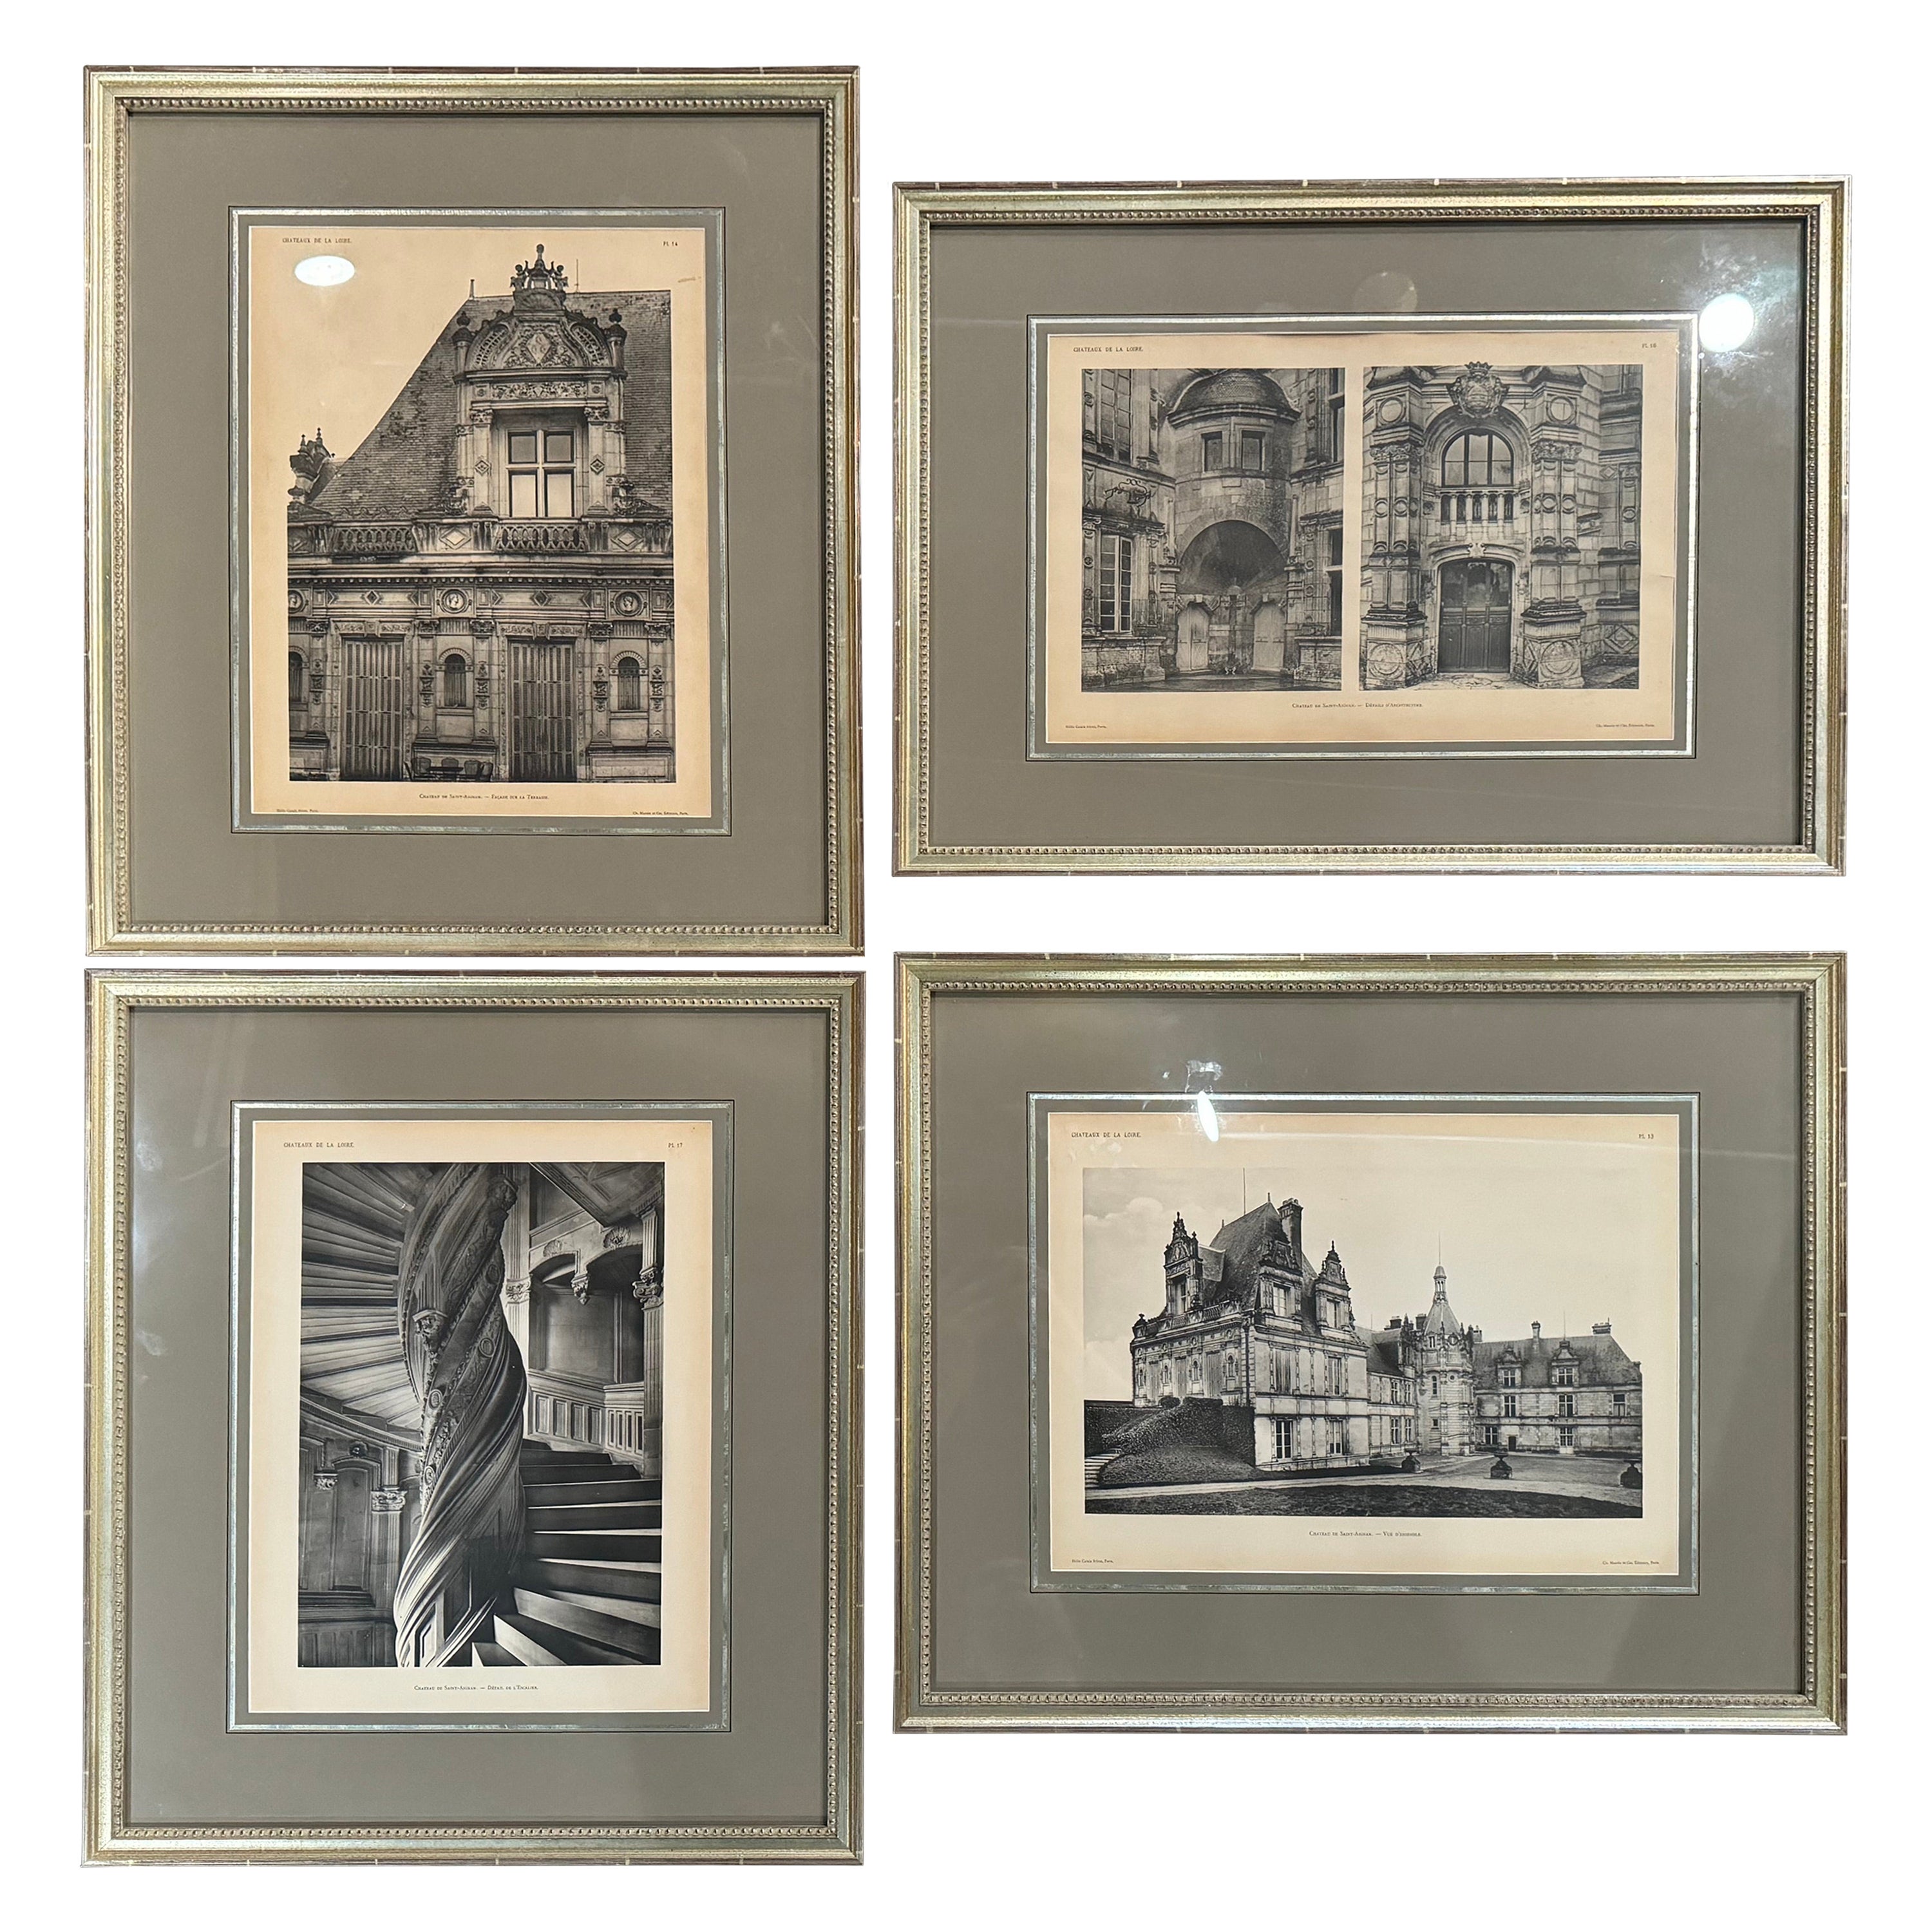 19th Century French Prints in Frames, "Chateau de Saint-Aignan", Set of 4 For Sale